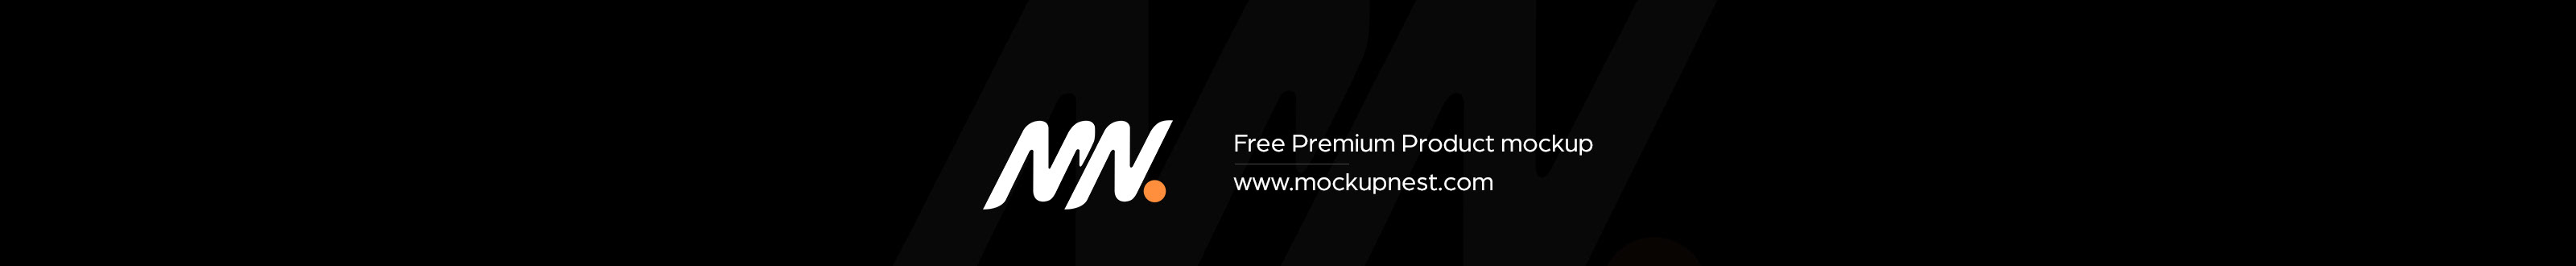 Mockupnest - Free Premium Mockups's profile banner